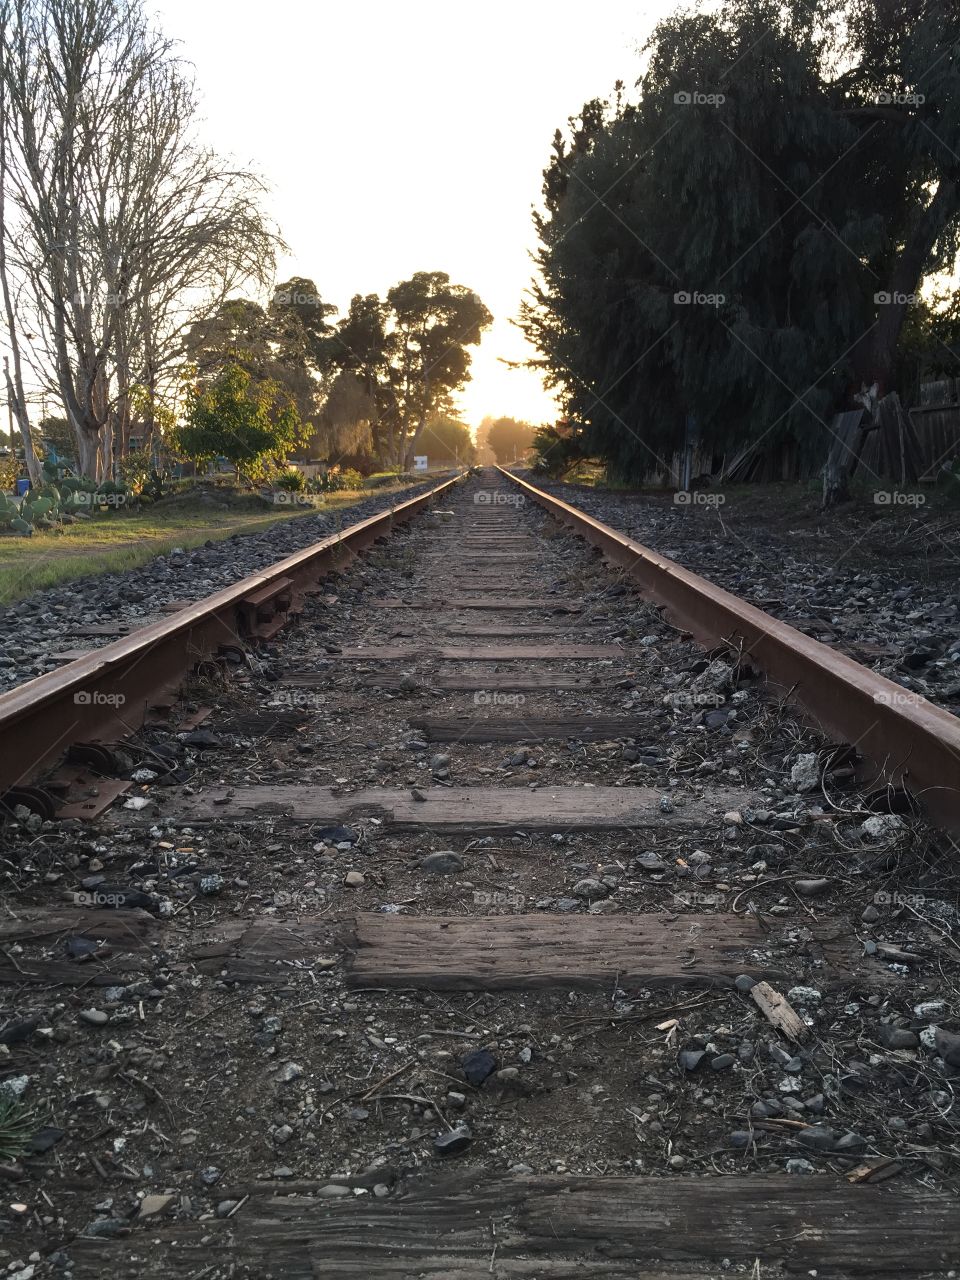 No filter, train tracks at sunset